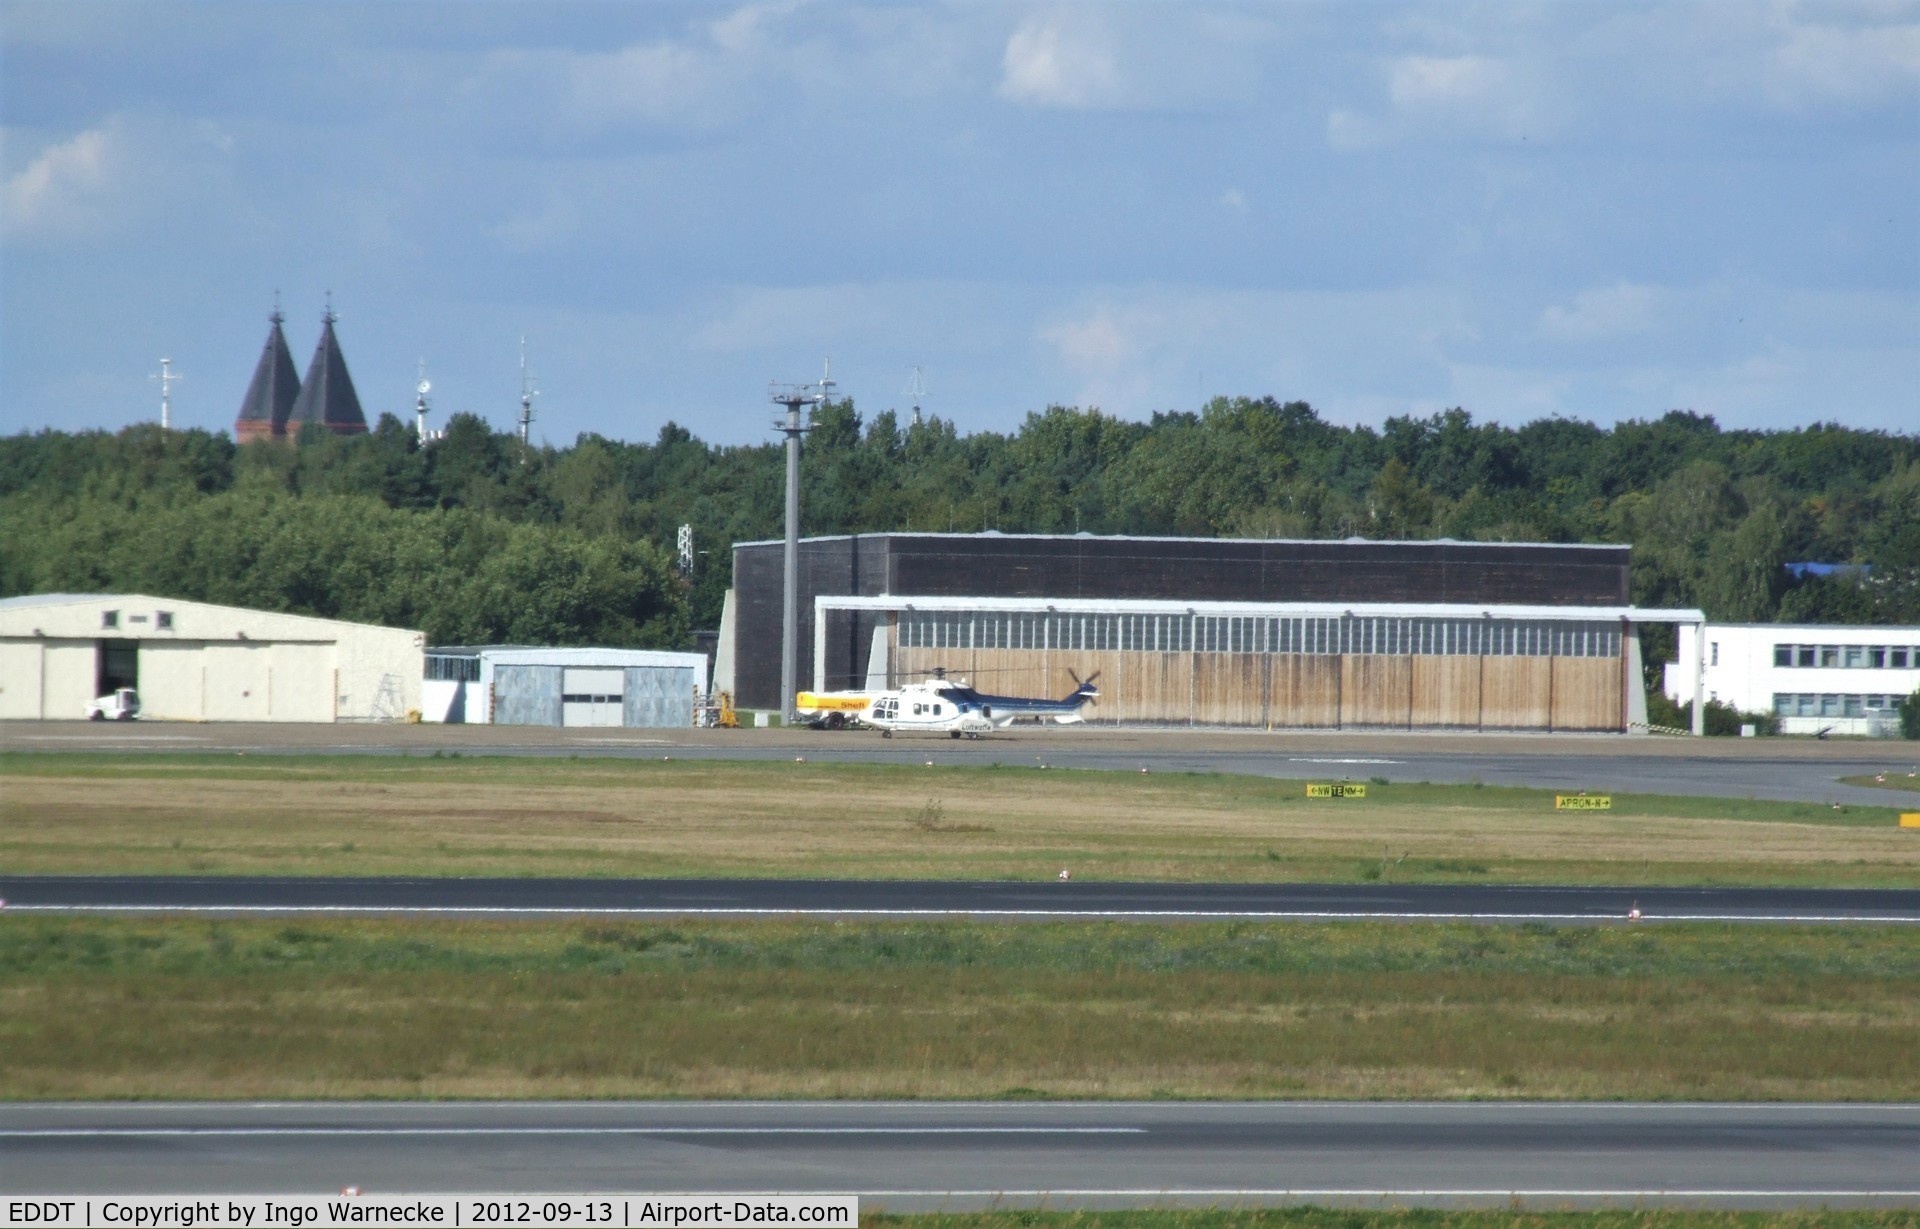 Tegel International Airport (closing in 2011), Berlin Germany (EDDT) - hangars in the military part of Berlin-Tegel